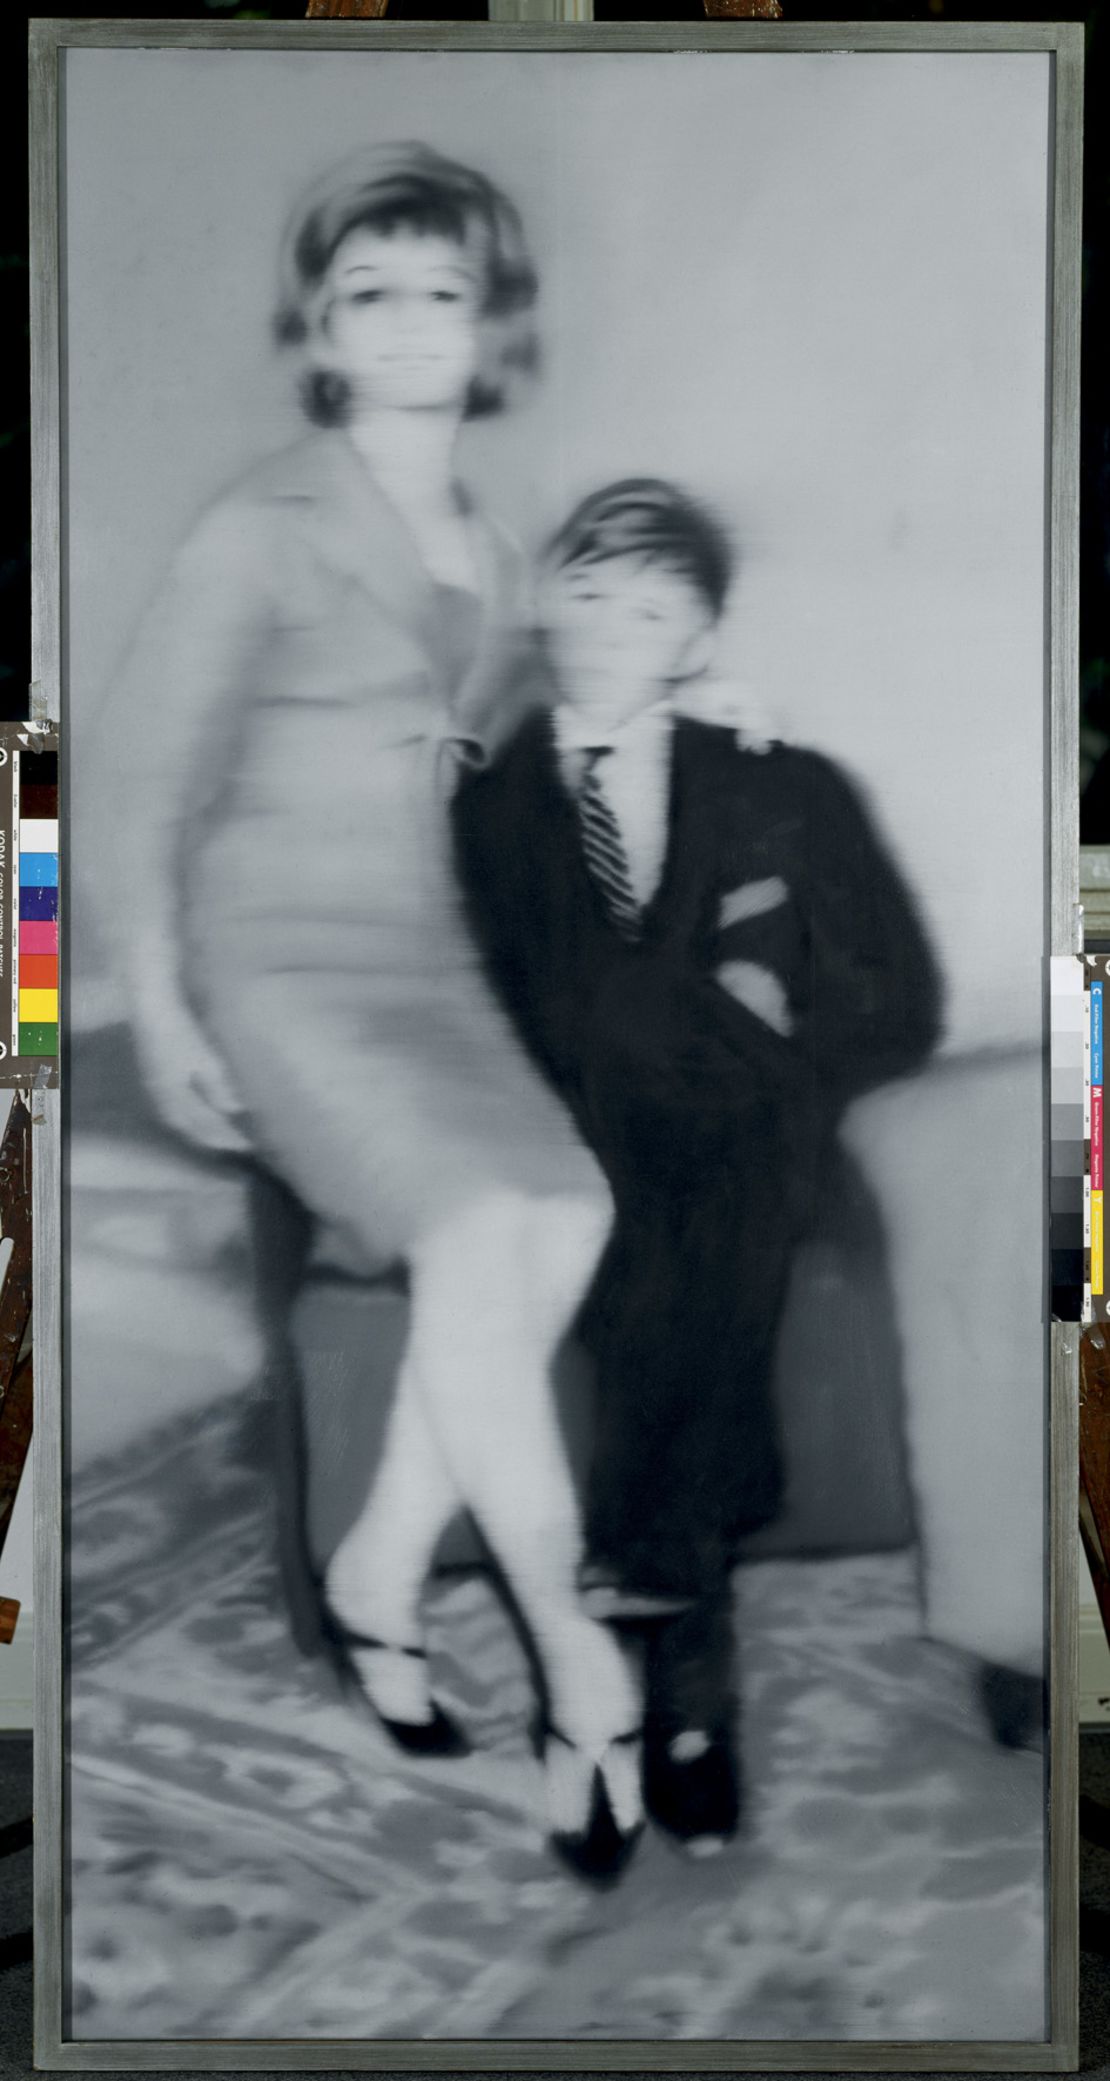 Gerhard Richter, "Helga Matura with her Fiancé" (1966).